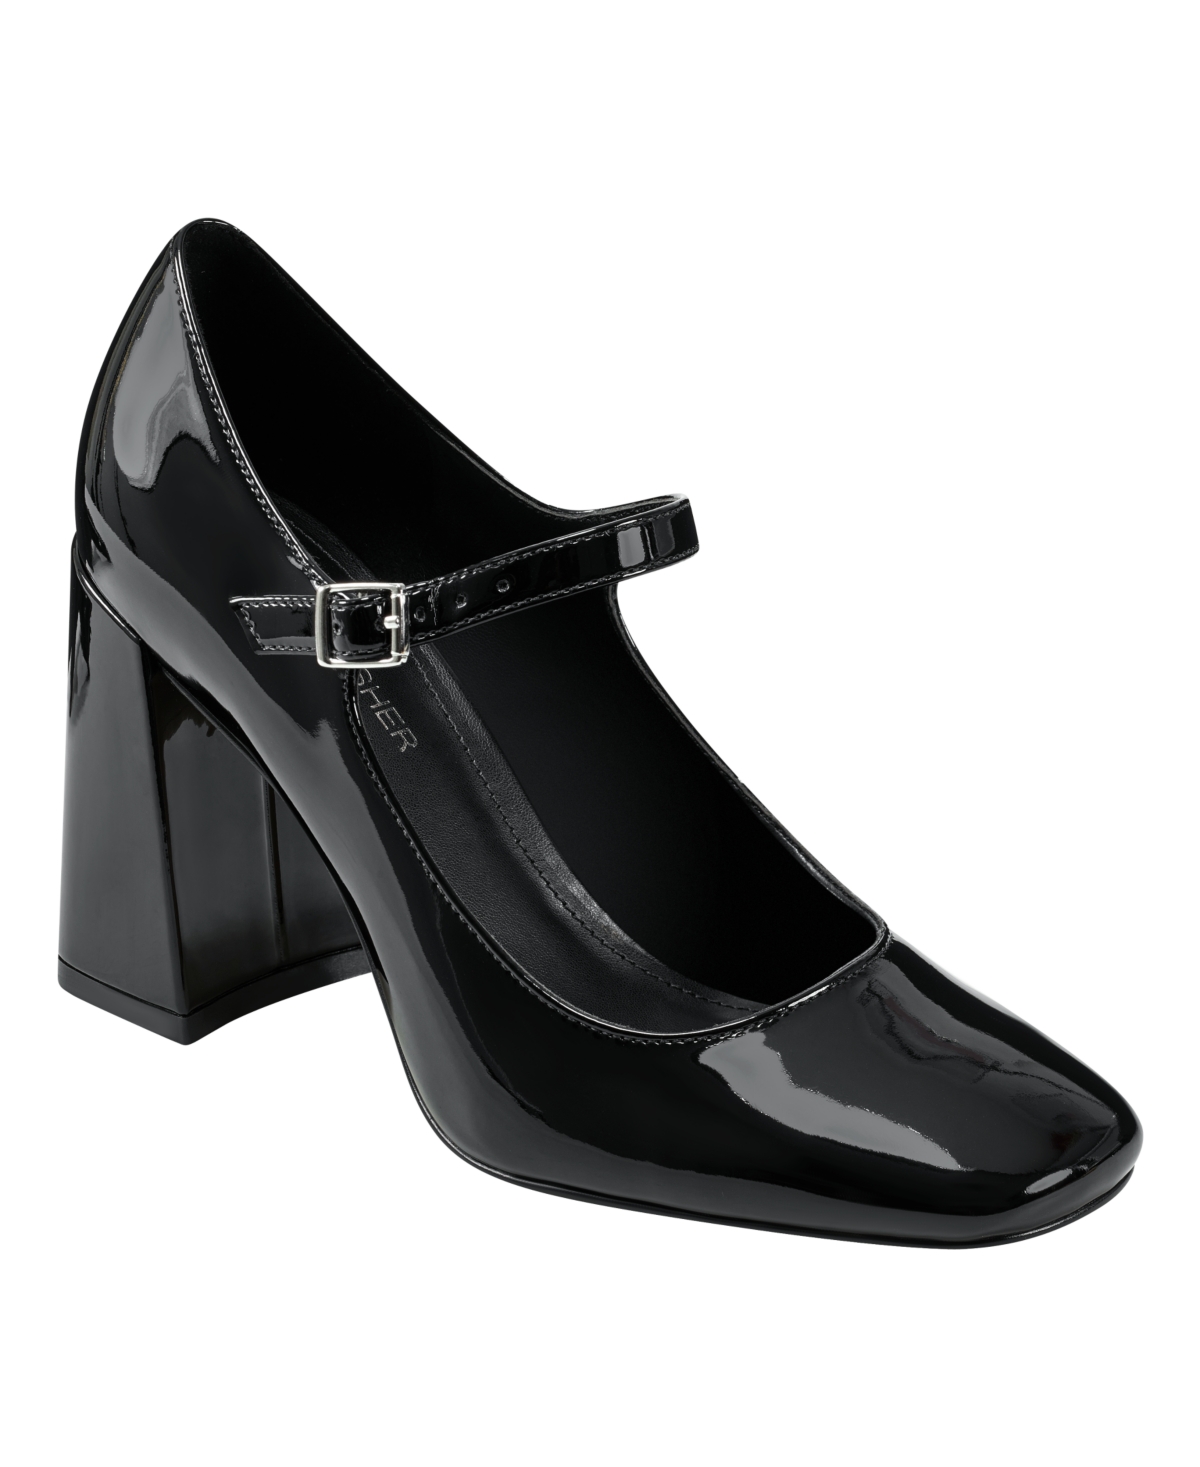 Women's Charin Square Toe Block Heel Dress Pumps - Black Faux Patent Leather